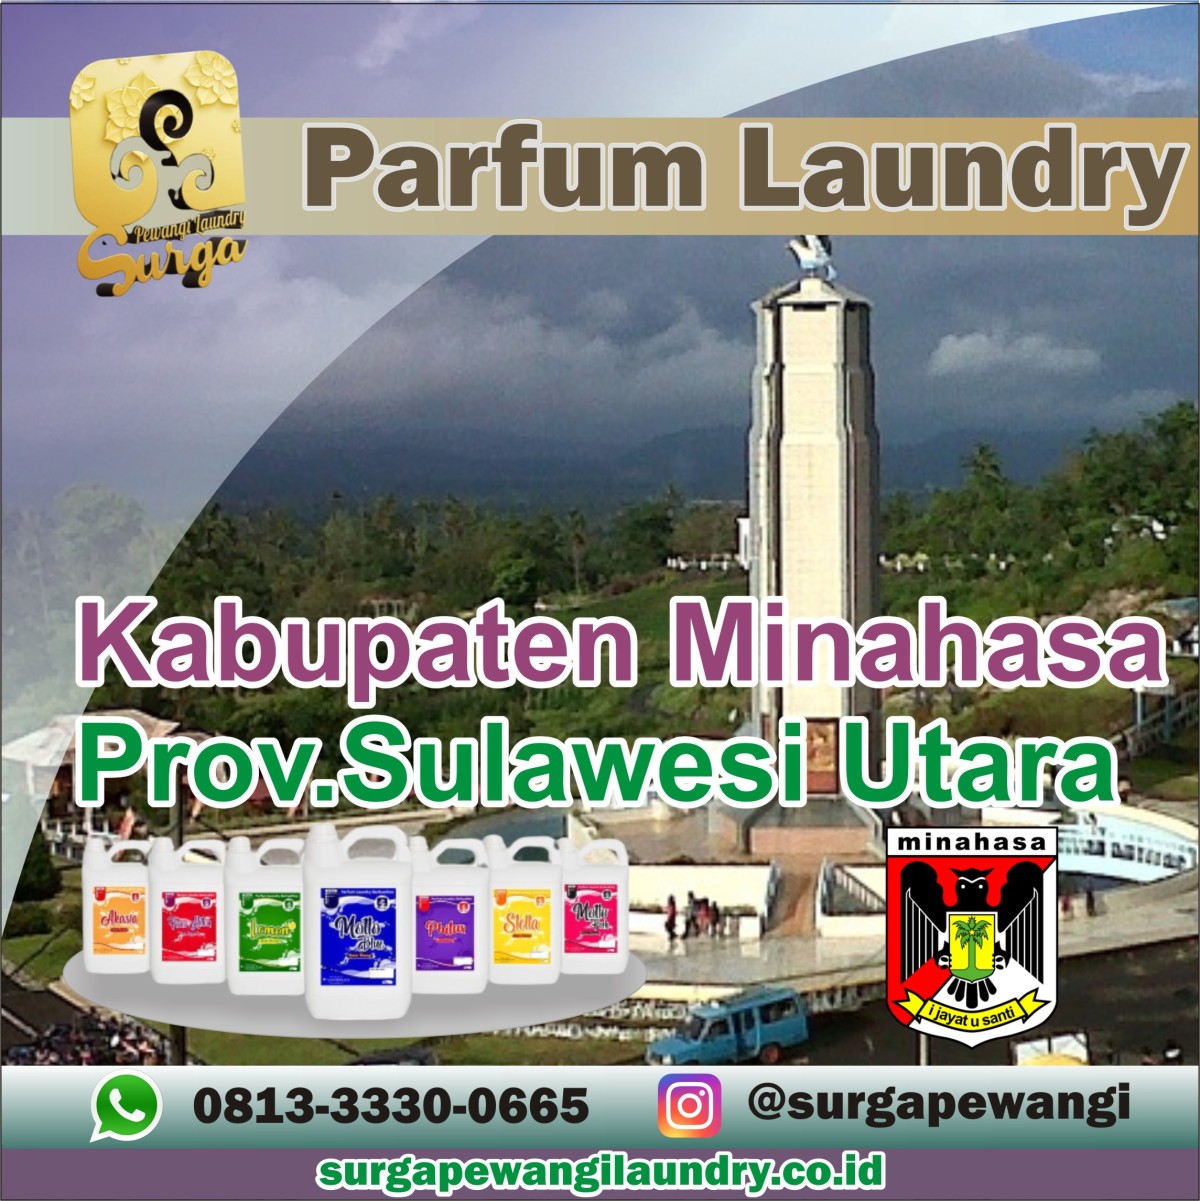 Parfum Laundry Kabupaten Minahasa, Sulawesi Utara